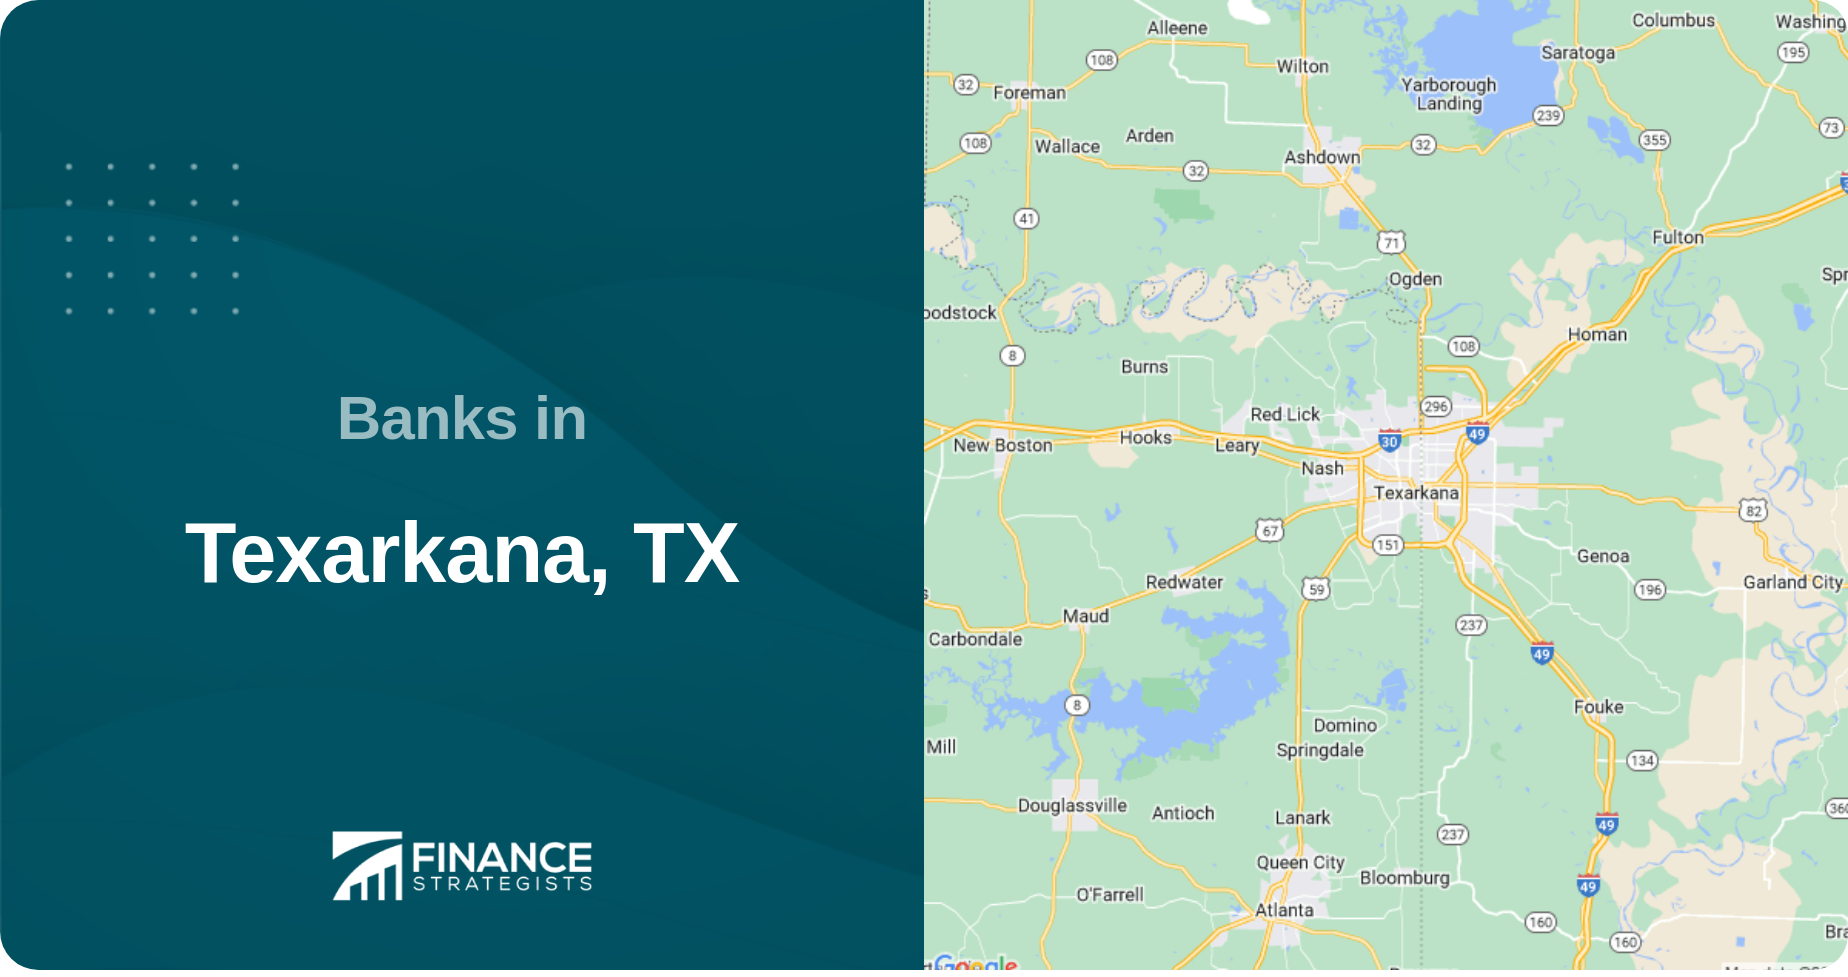 Banks in Texarkana, TX